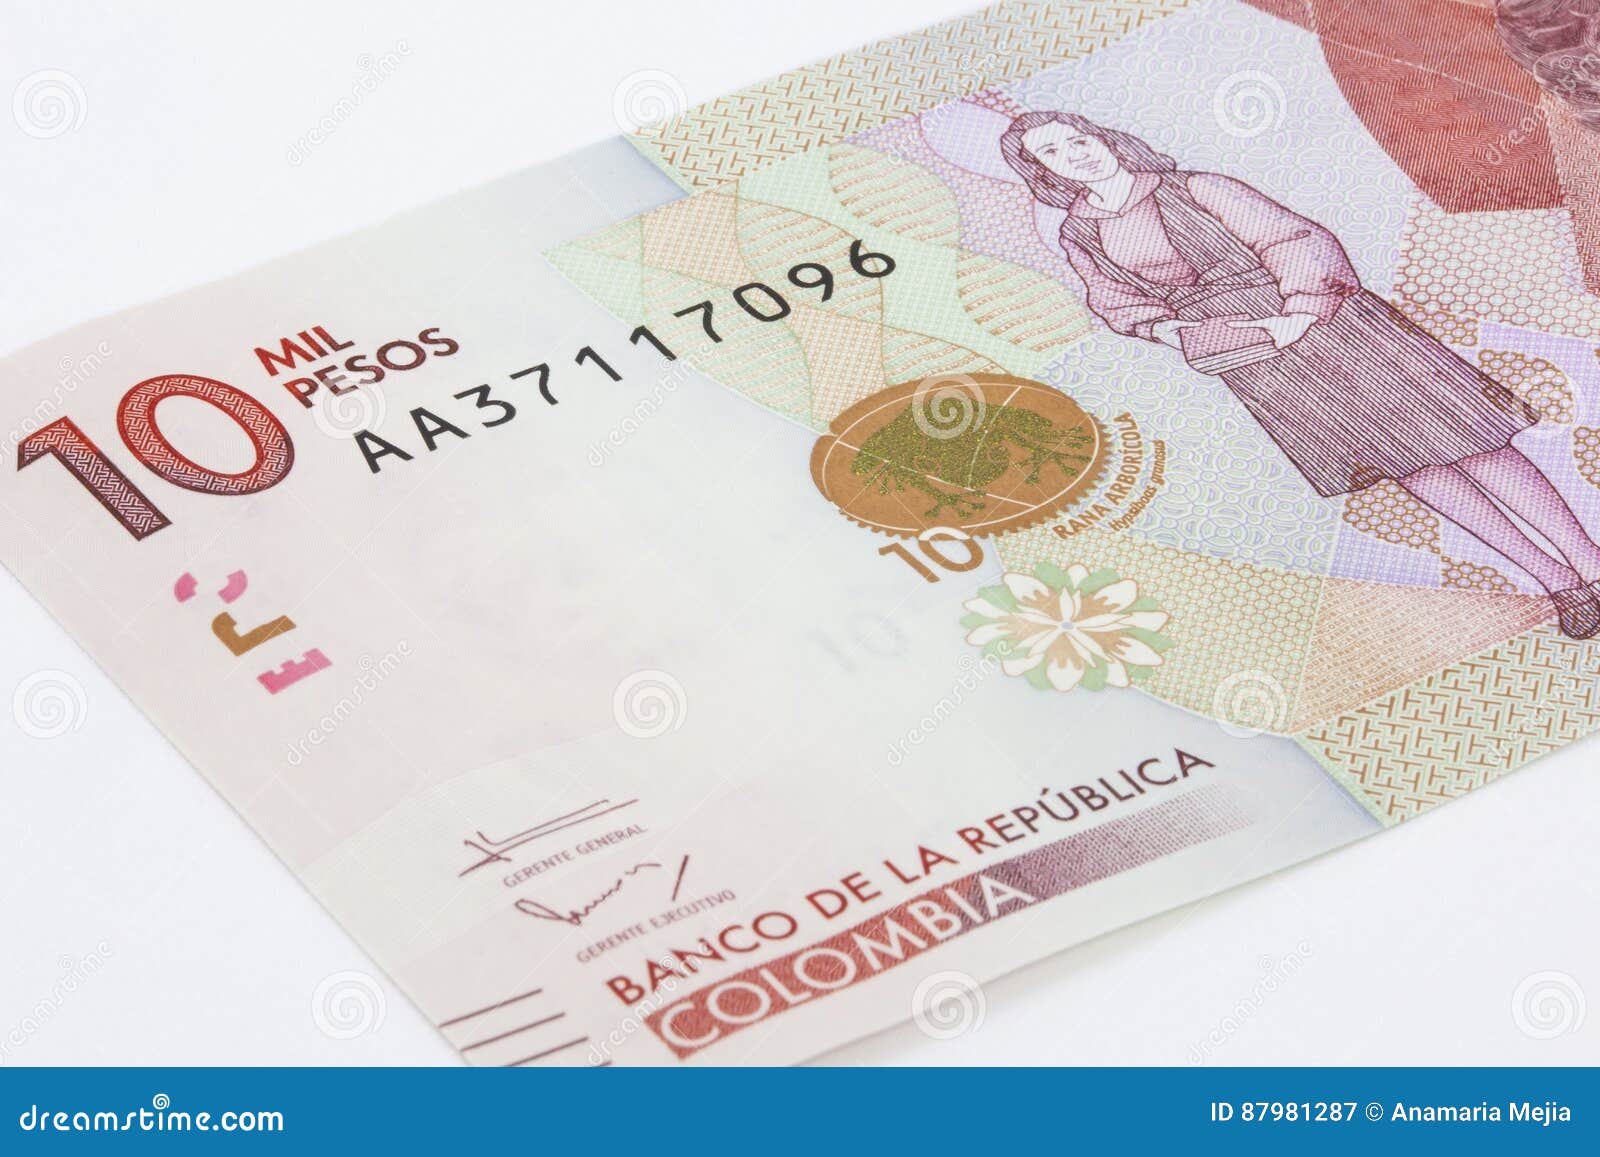 ten thousand colombian pesos bill